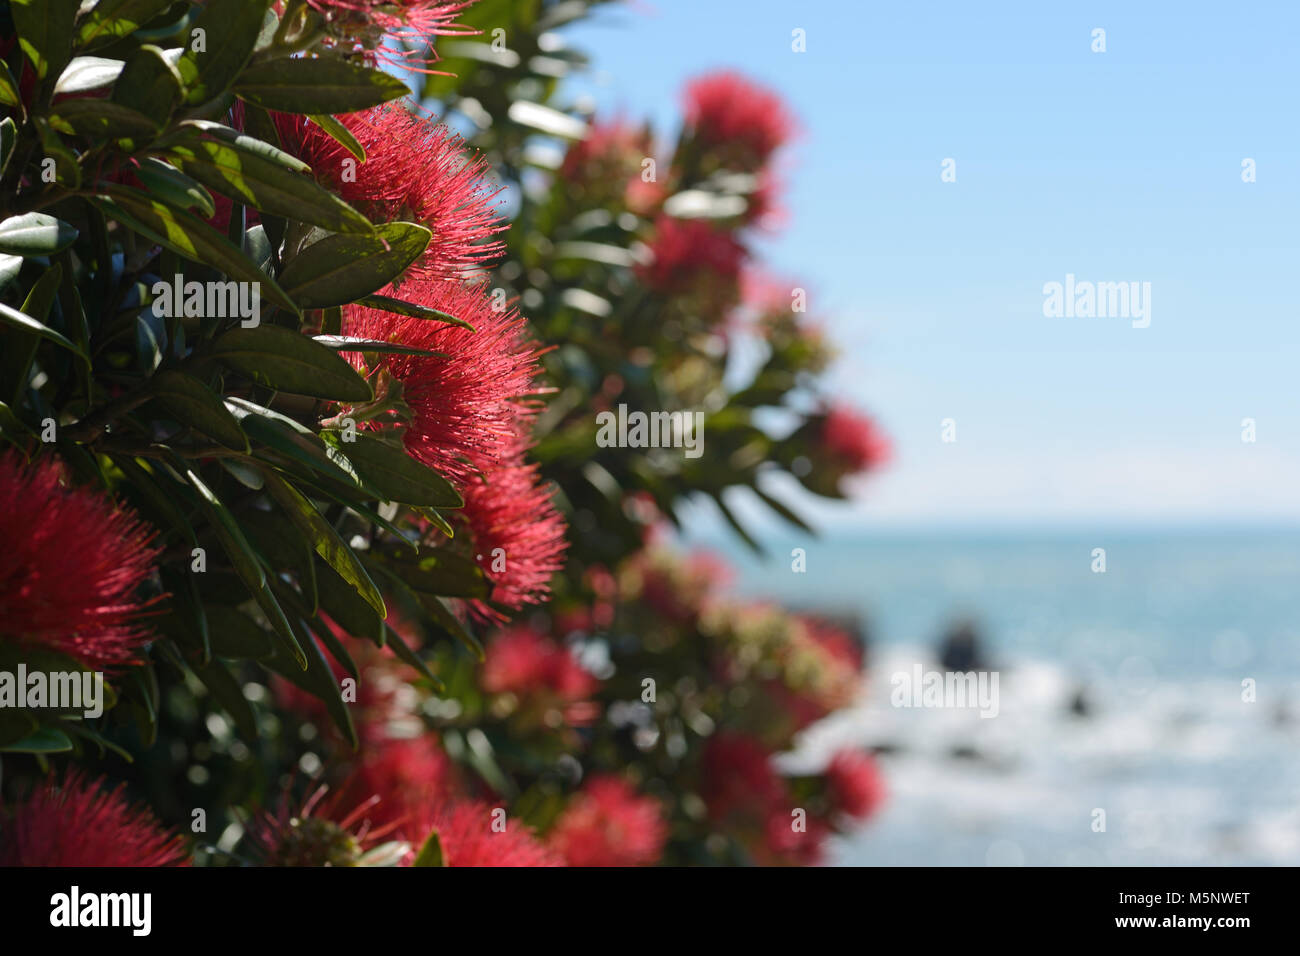 Flowers of New Zealand pohutakawa, Metrosideros excelsa, frame a beach scene on the West Coast, South Island, New Zealand. Stock Photo